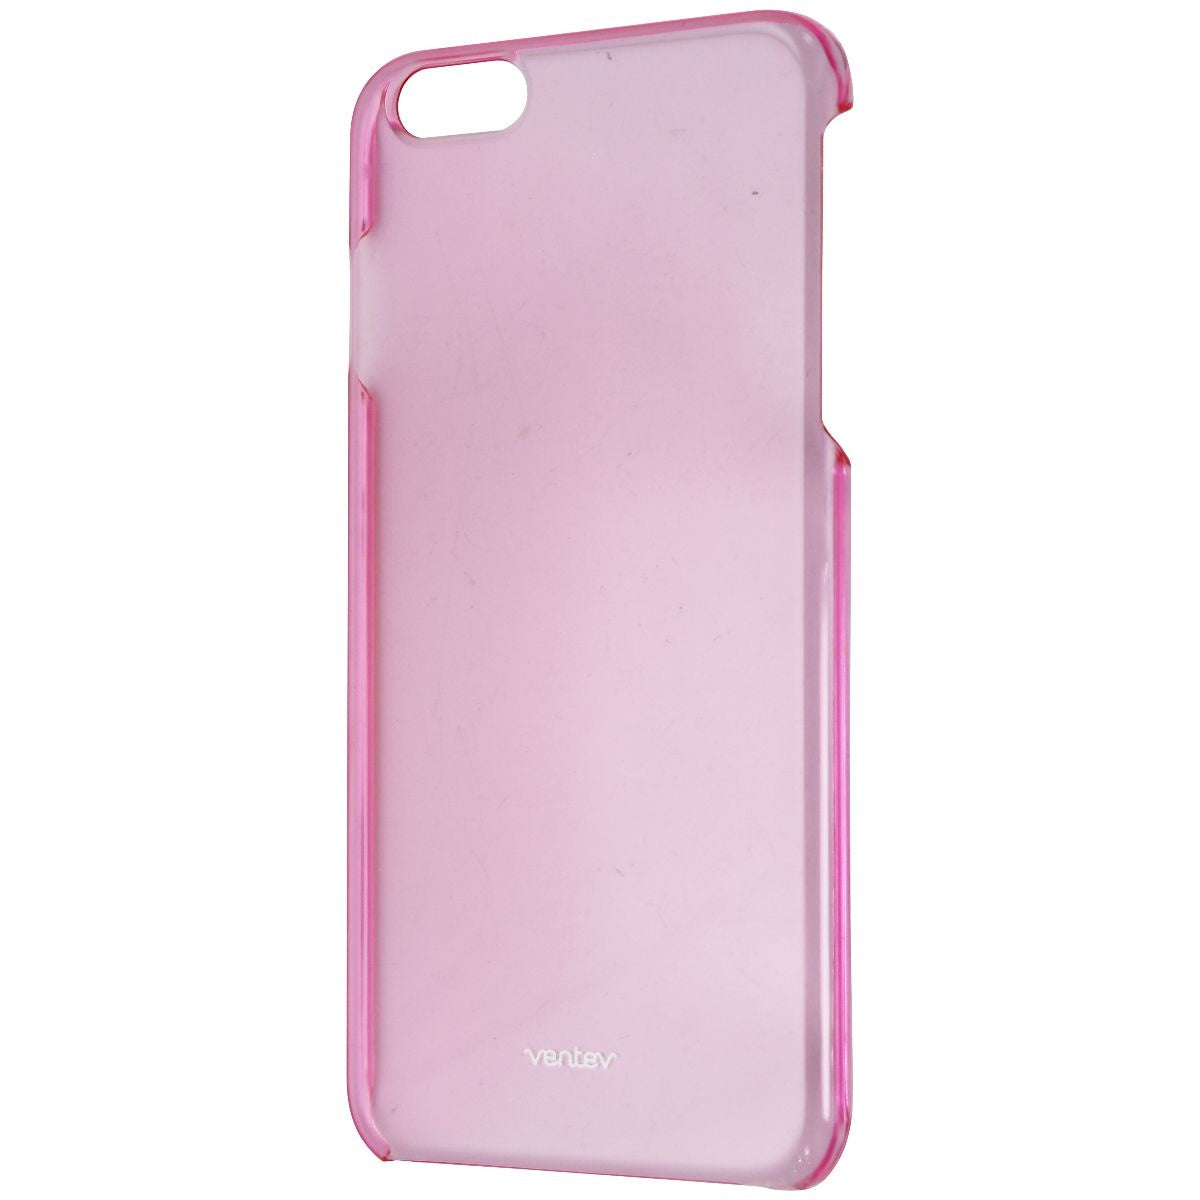 Ventev Regen Slim Hard Case for iPhone 6s Plus/6 Plus - Translucent Pink Cell Phone - Cases, Covers & Skins Ventev    - Simple Cell Bulk Wholesale Pricing - USA Seller